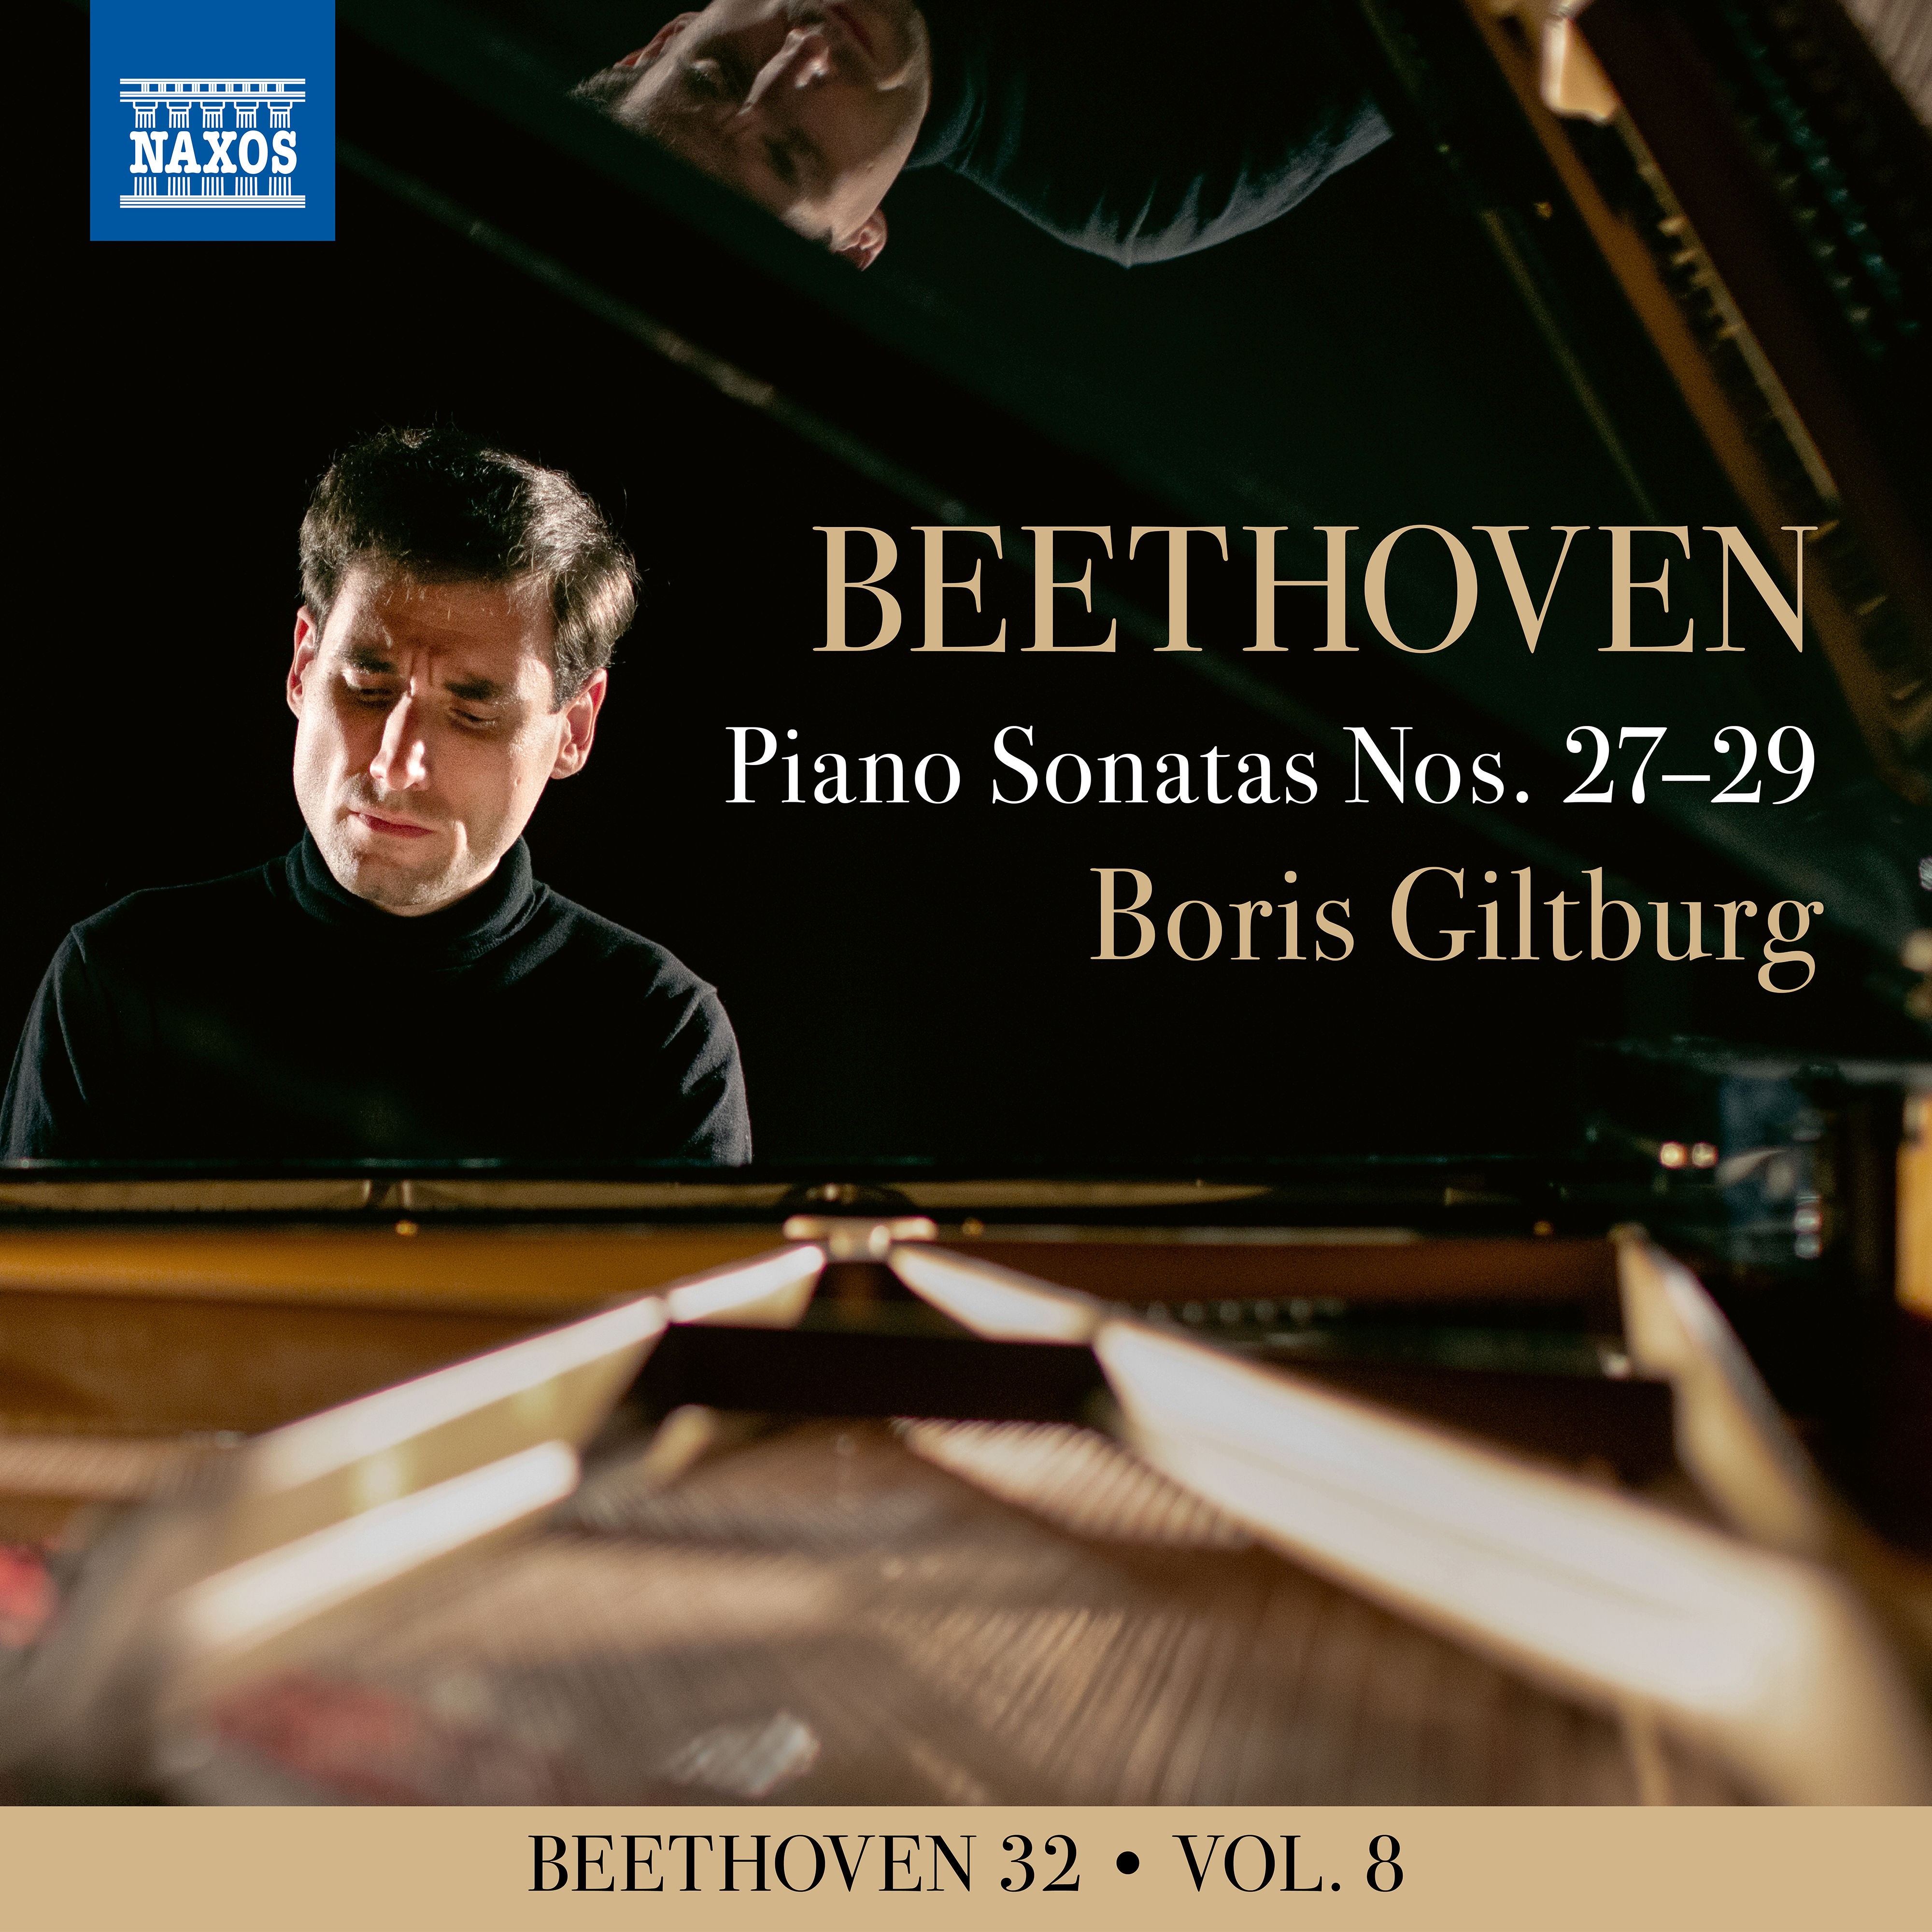 Boris Giltburg – Beethoven 32, Vol. 8 Piano Sonatas Nos. 27-29 (2021) [FLAC 24bit/96kHz]